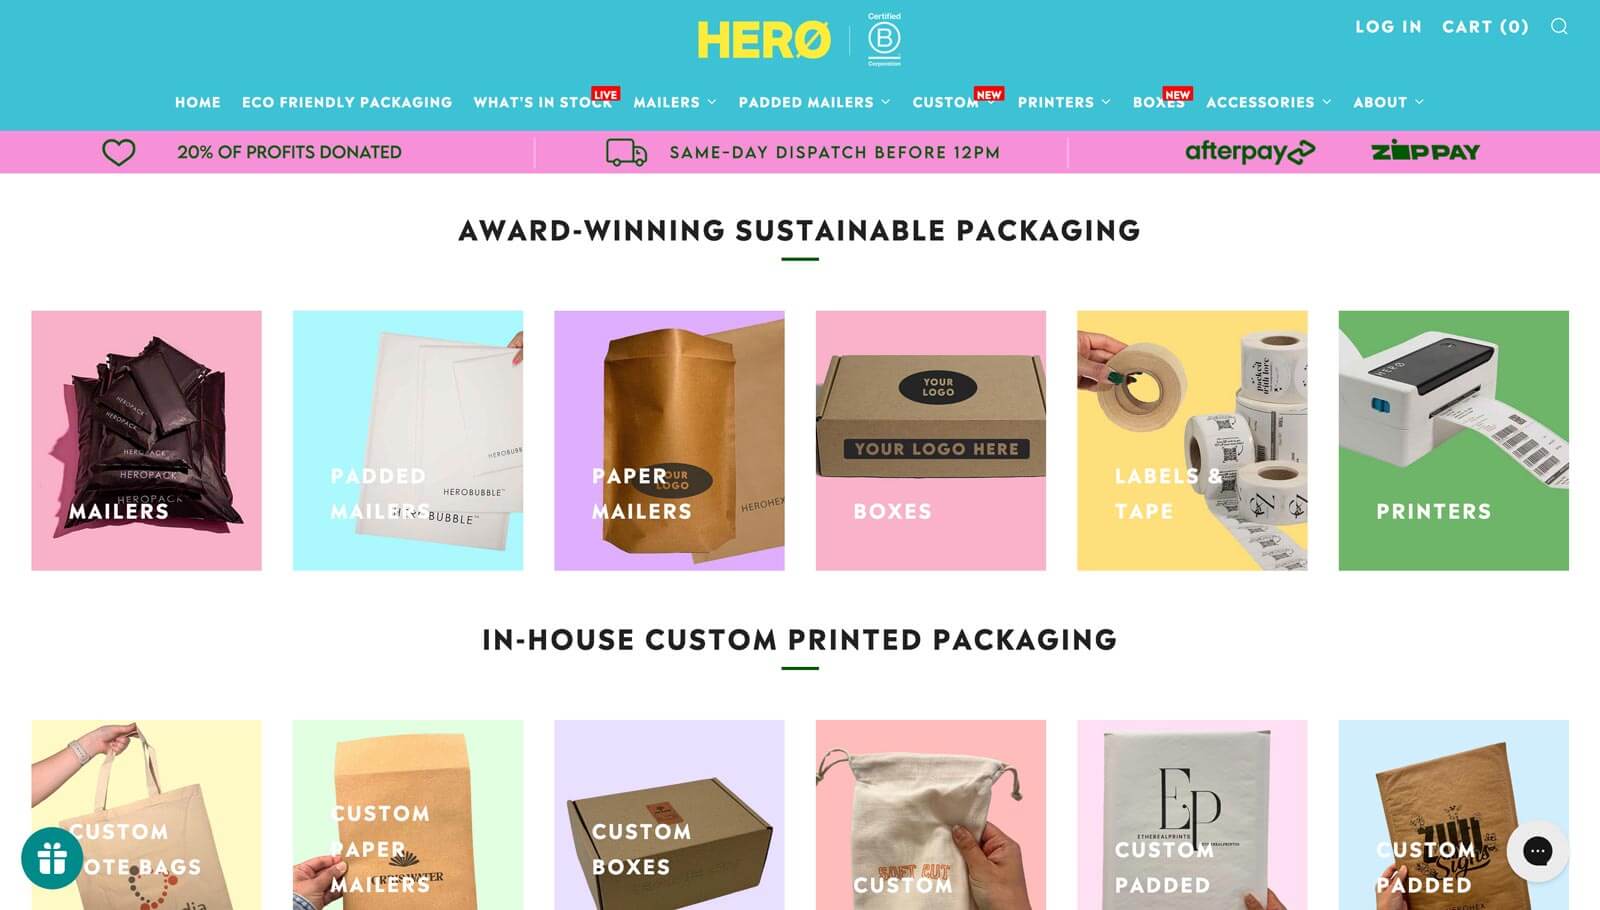 eCommerce Trend #3 - Hero Packaging - Popular Sustainable Packaging Provider